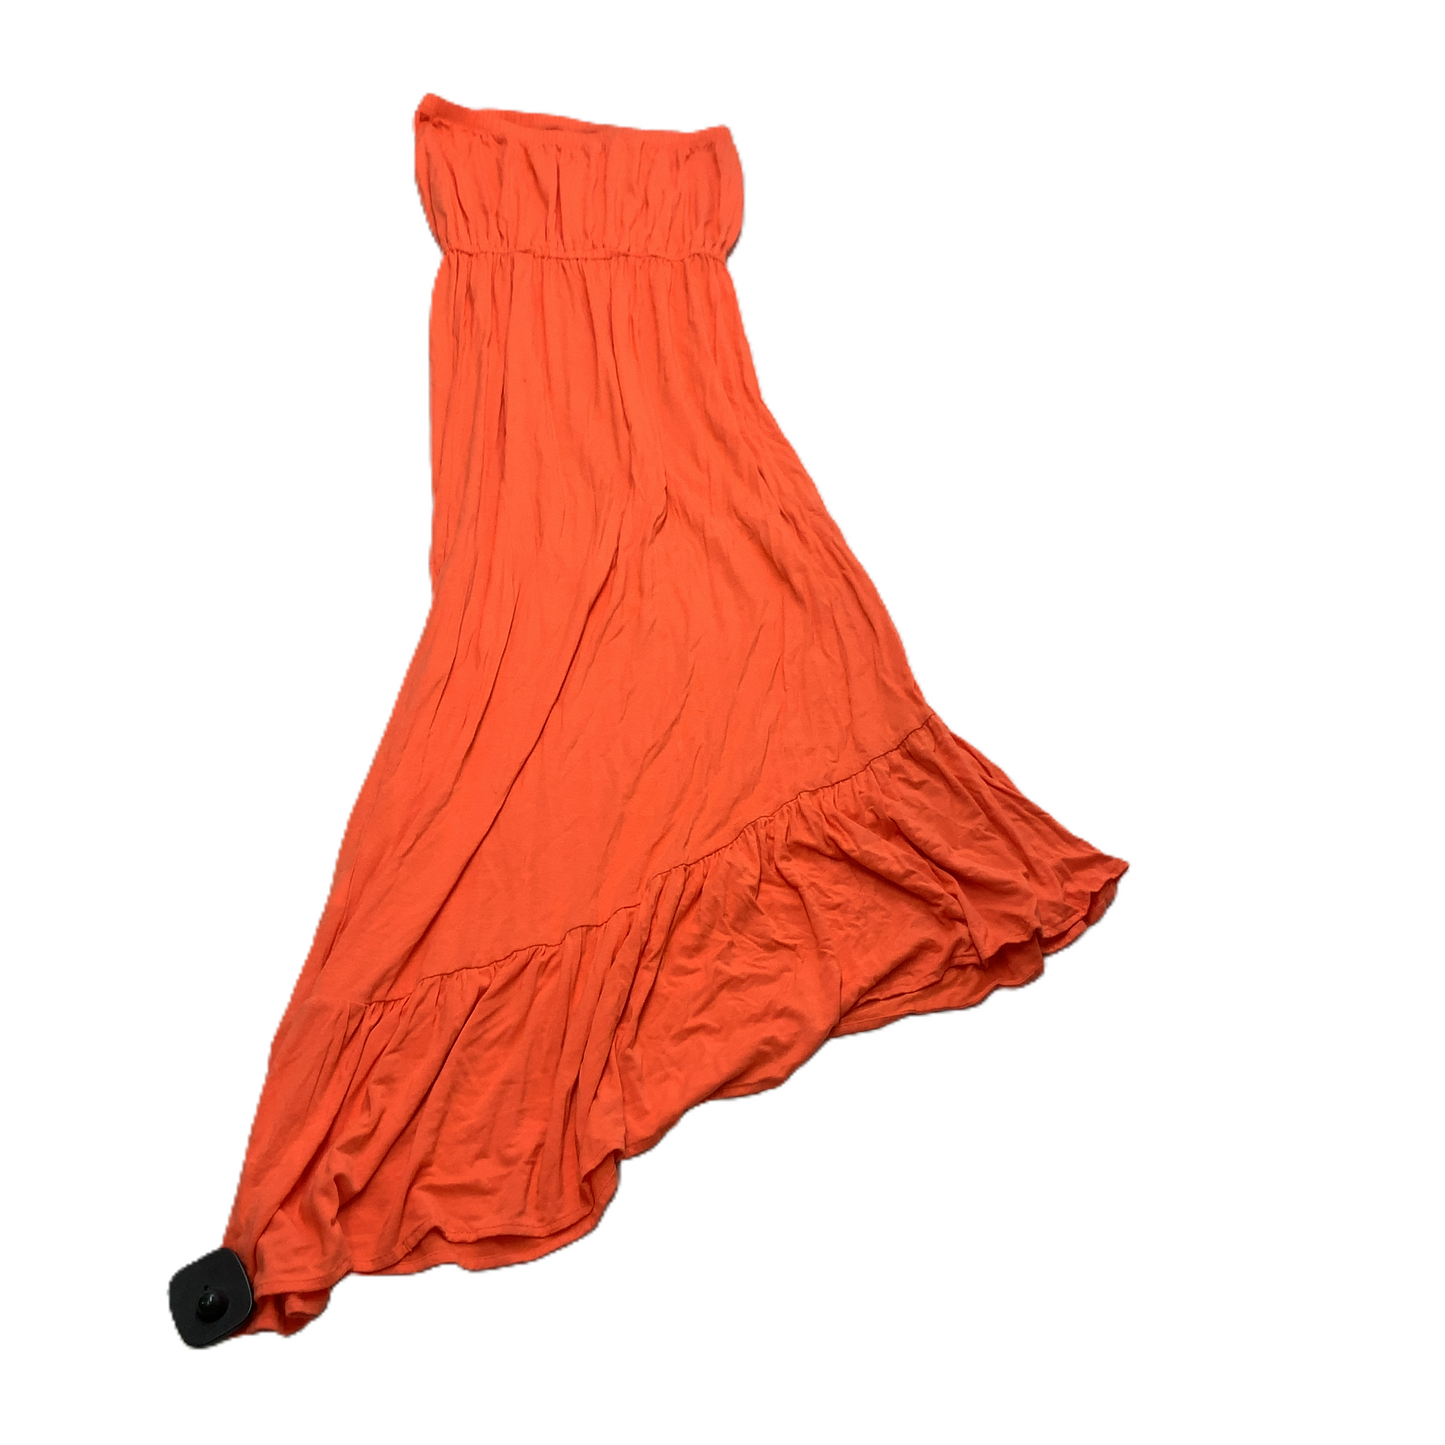 Orange  Dress Designer By Lilly Pulitzer  Size: S